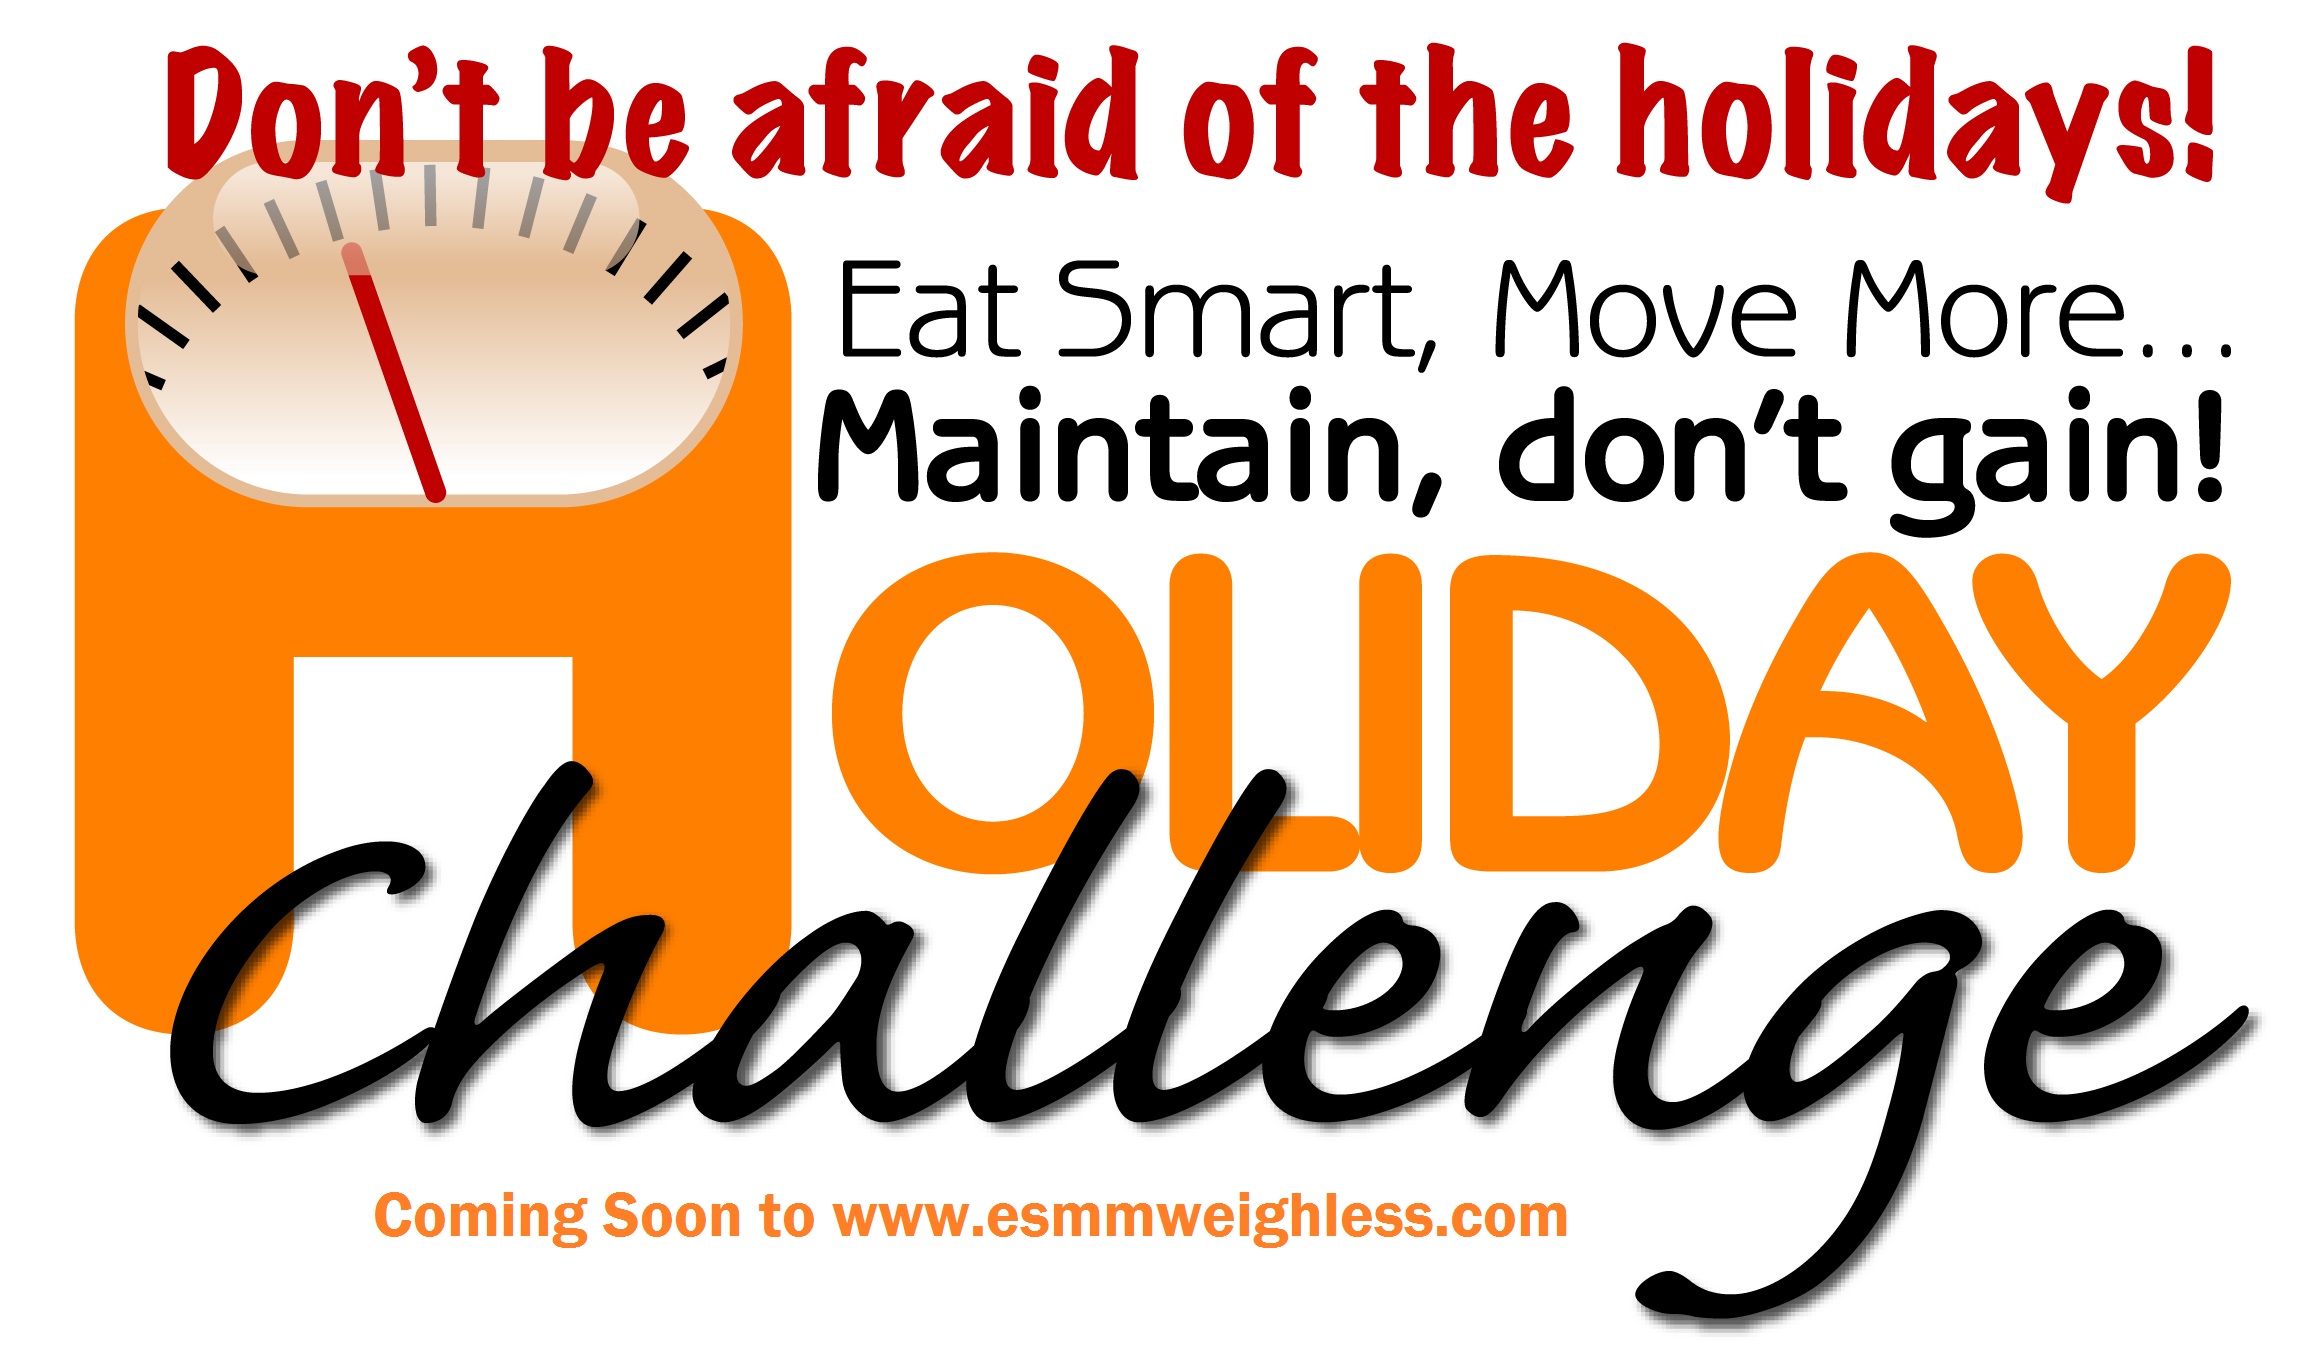 holiday challenge